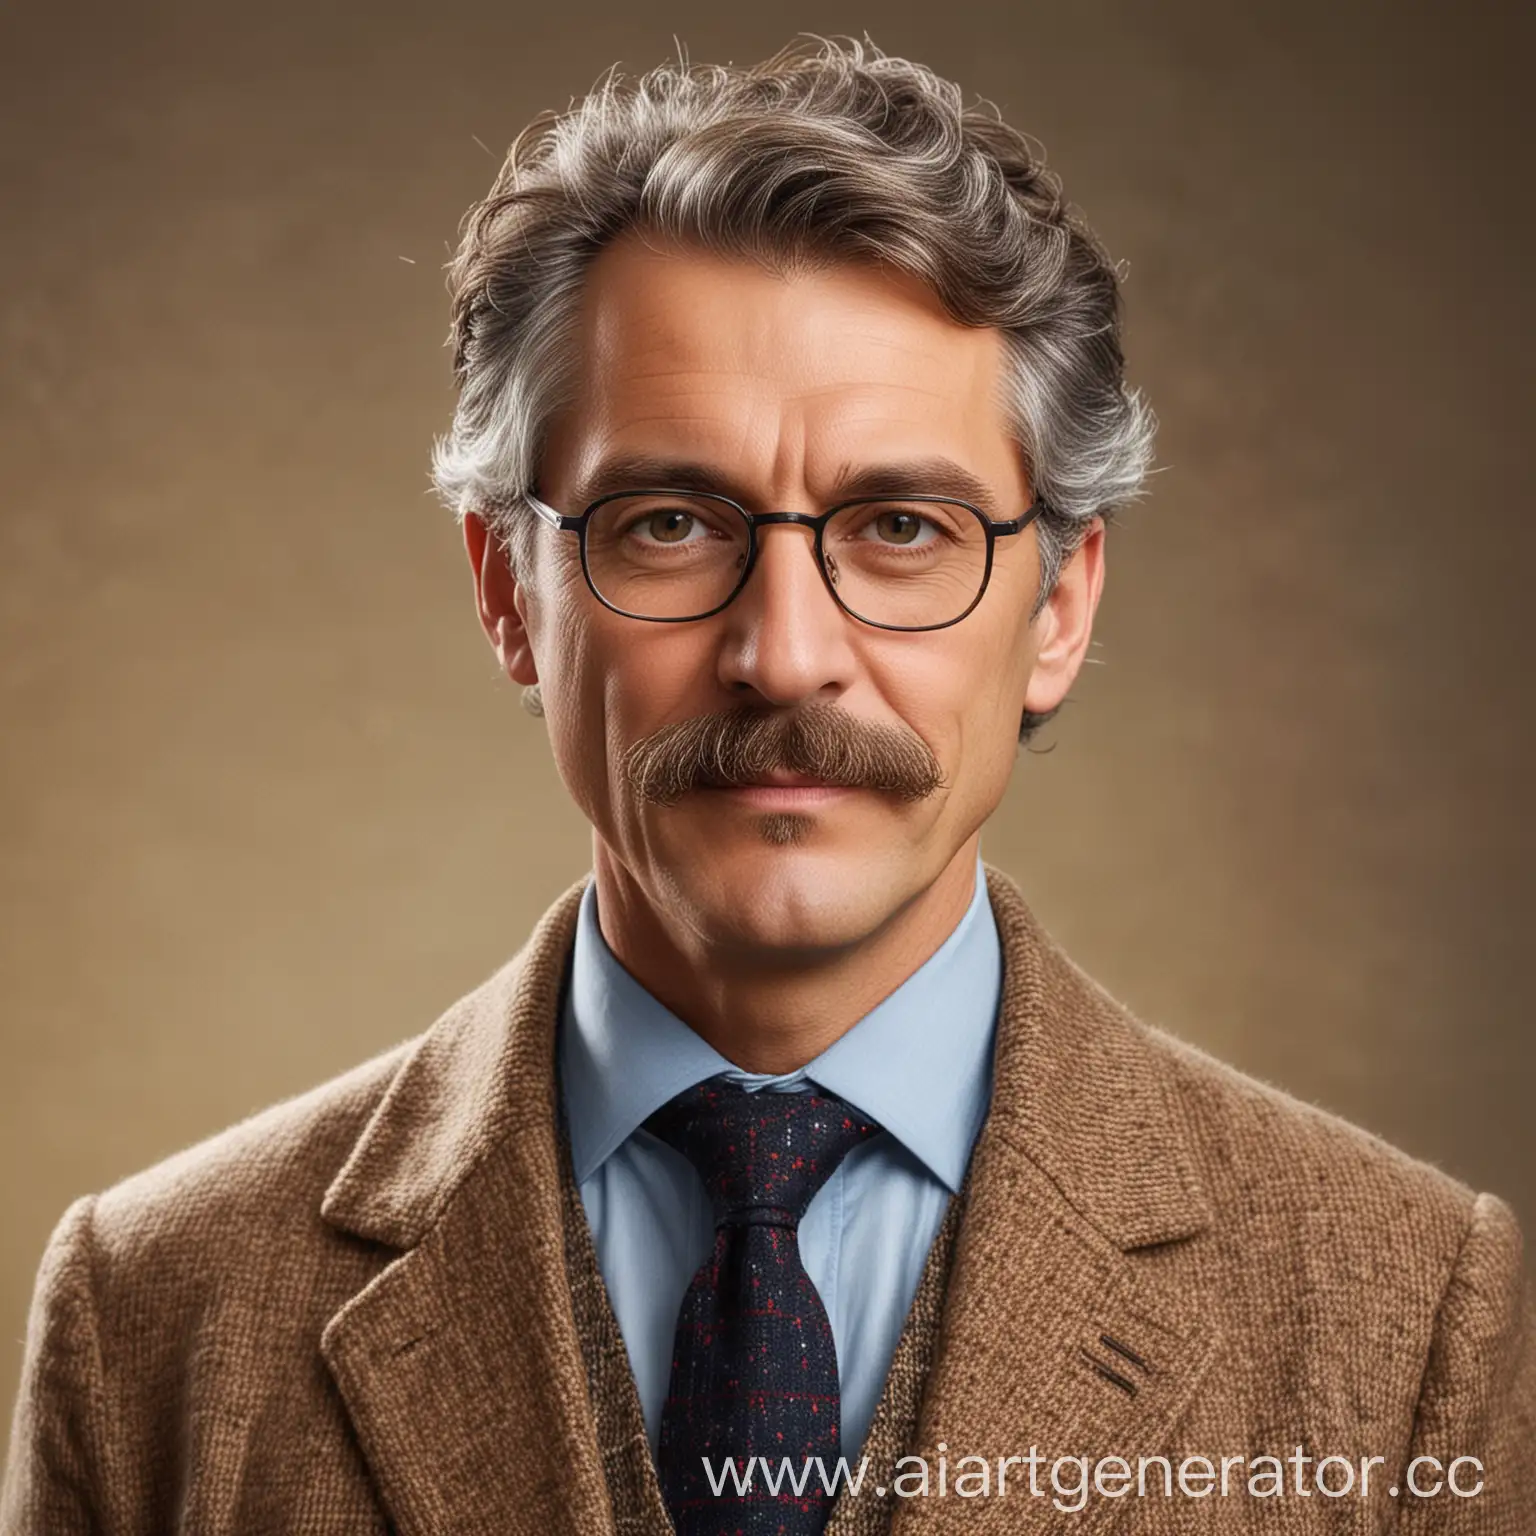 Portrait-of-a-Distinguished-Gentleman-in-Tweed-Jacket-and-Glasses